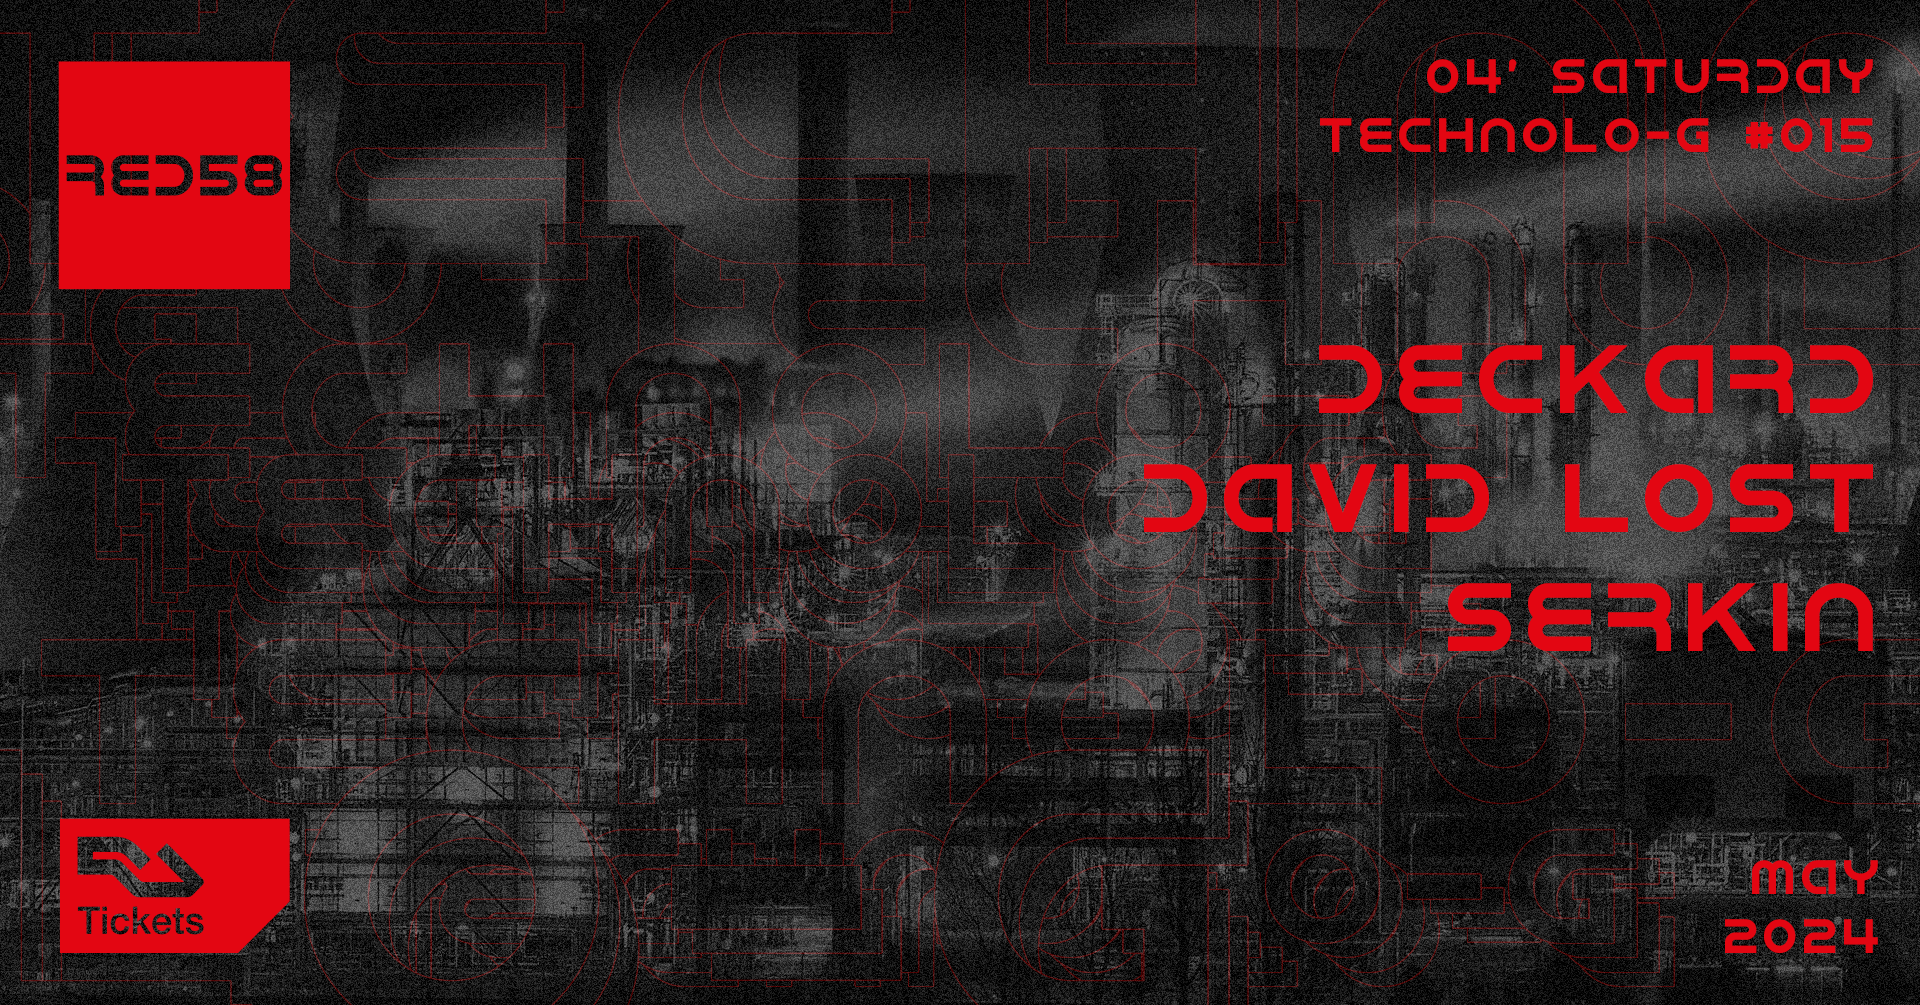 Technolo-G #015 with Deckard, DAVID LOST & Serkin - Página frontal